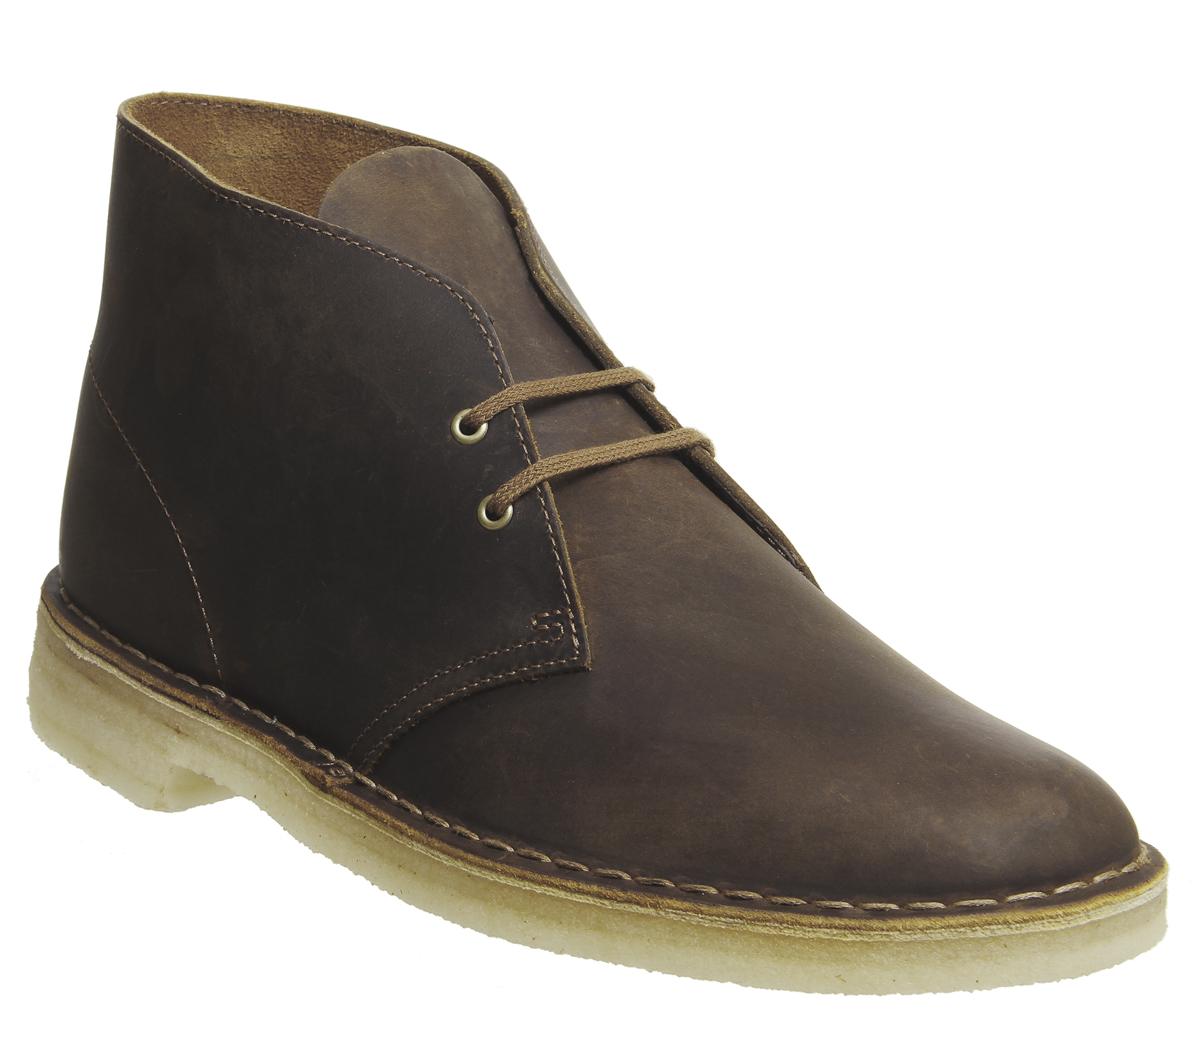 clarks originals desert boots in beeswax leather